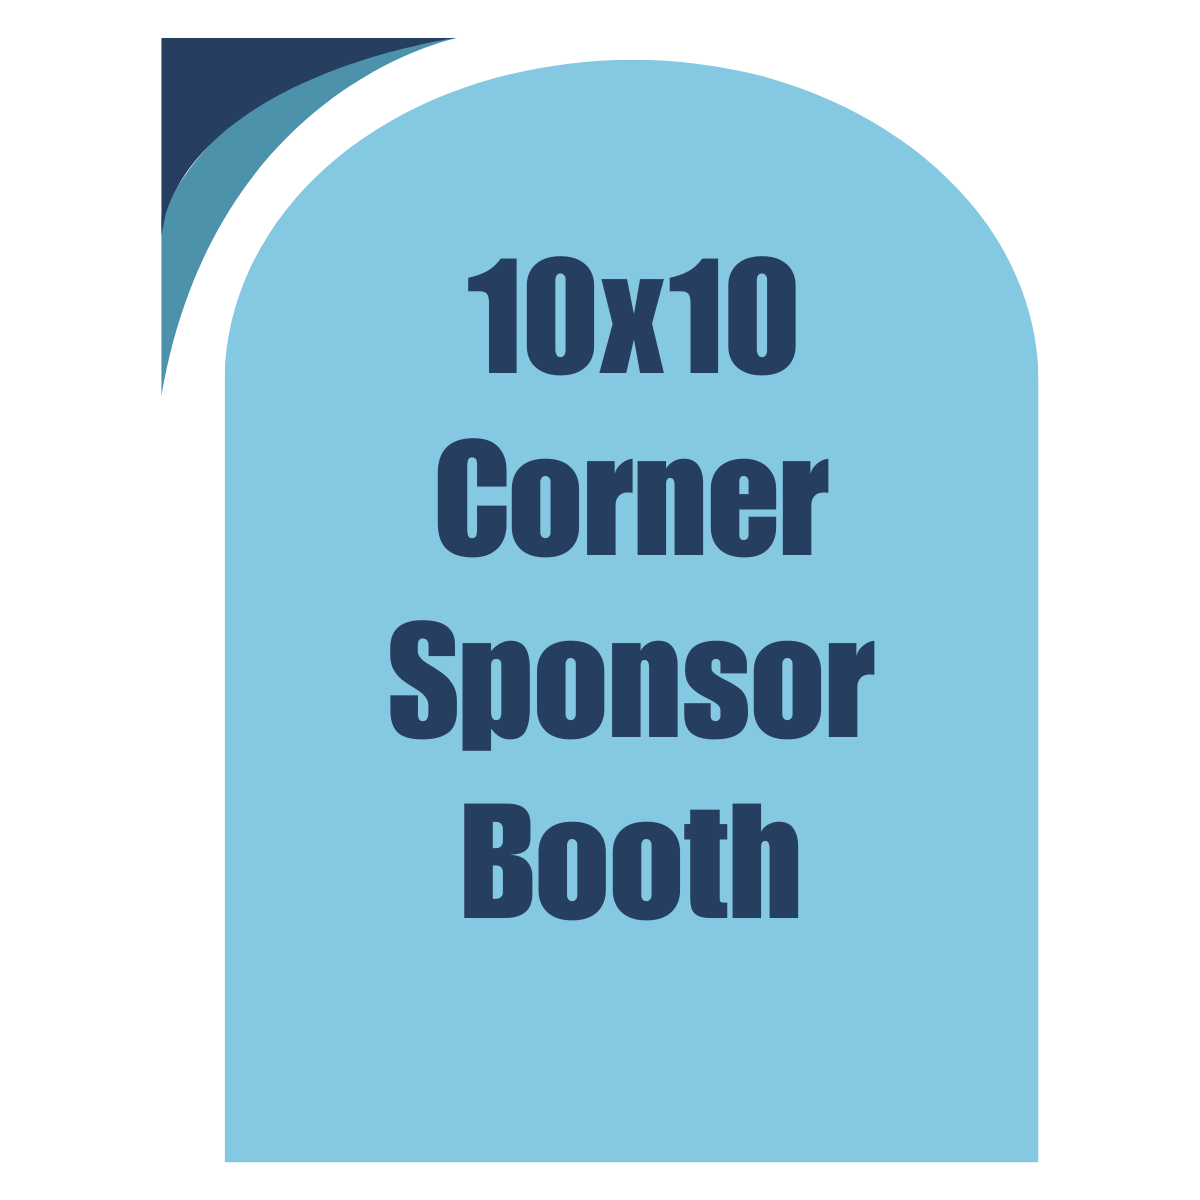 10x10 Corner Sponsor Booth